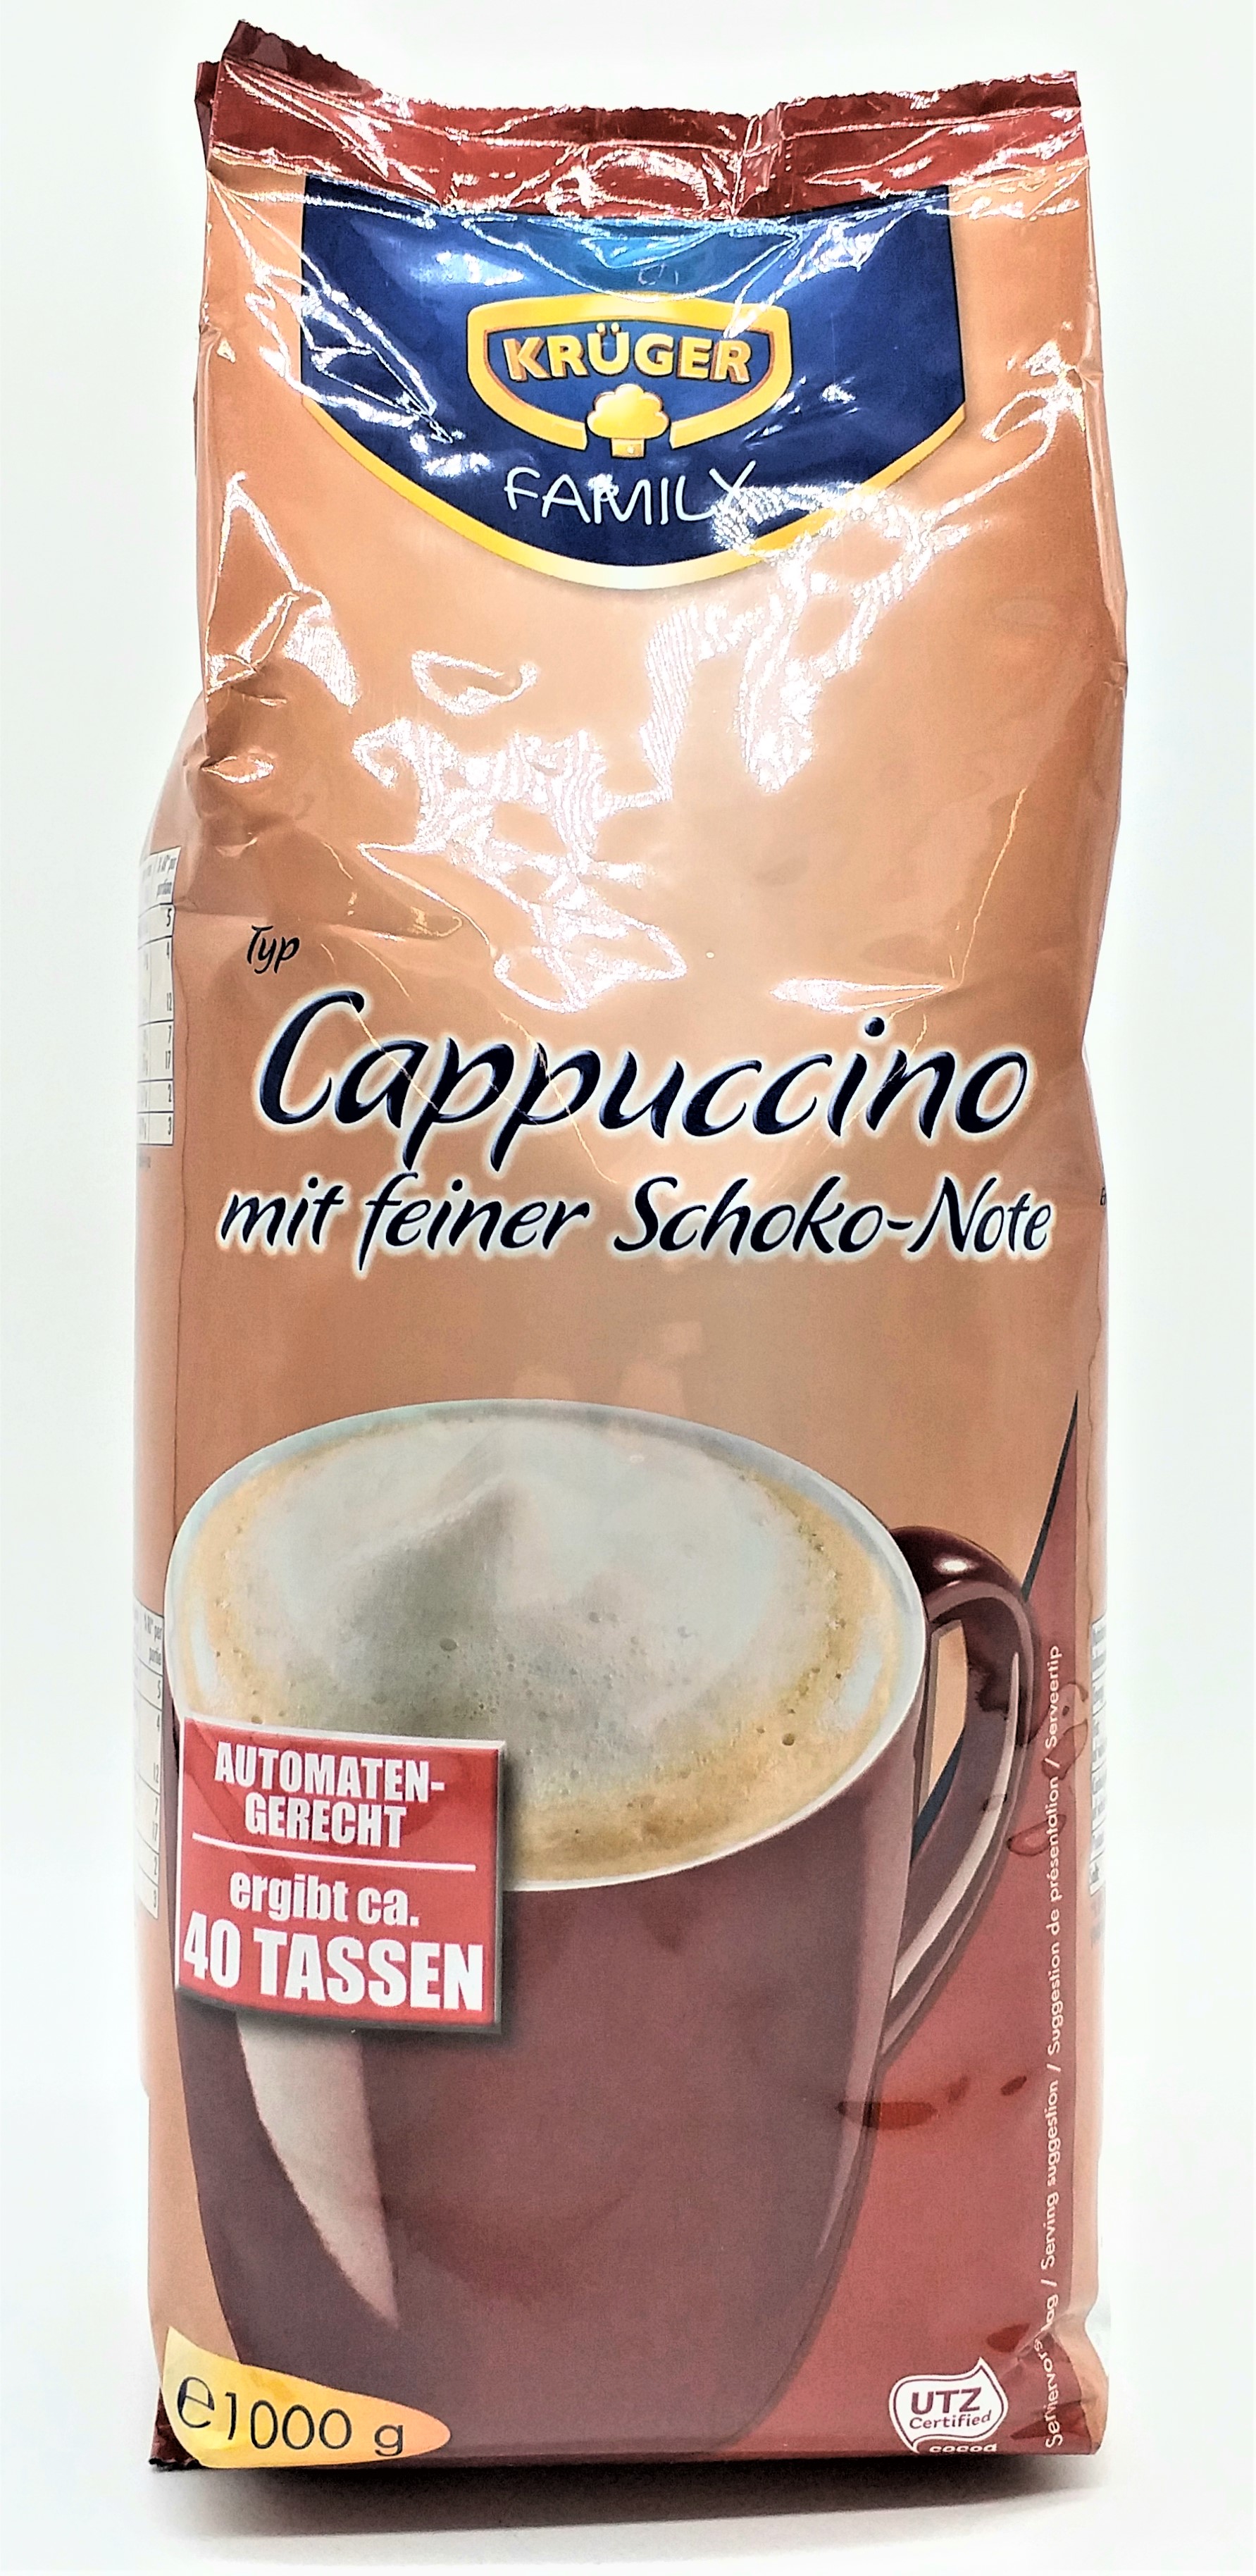 Krüger Cappuccino Kakaonote 1kg